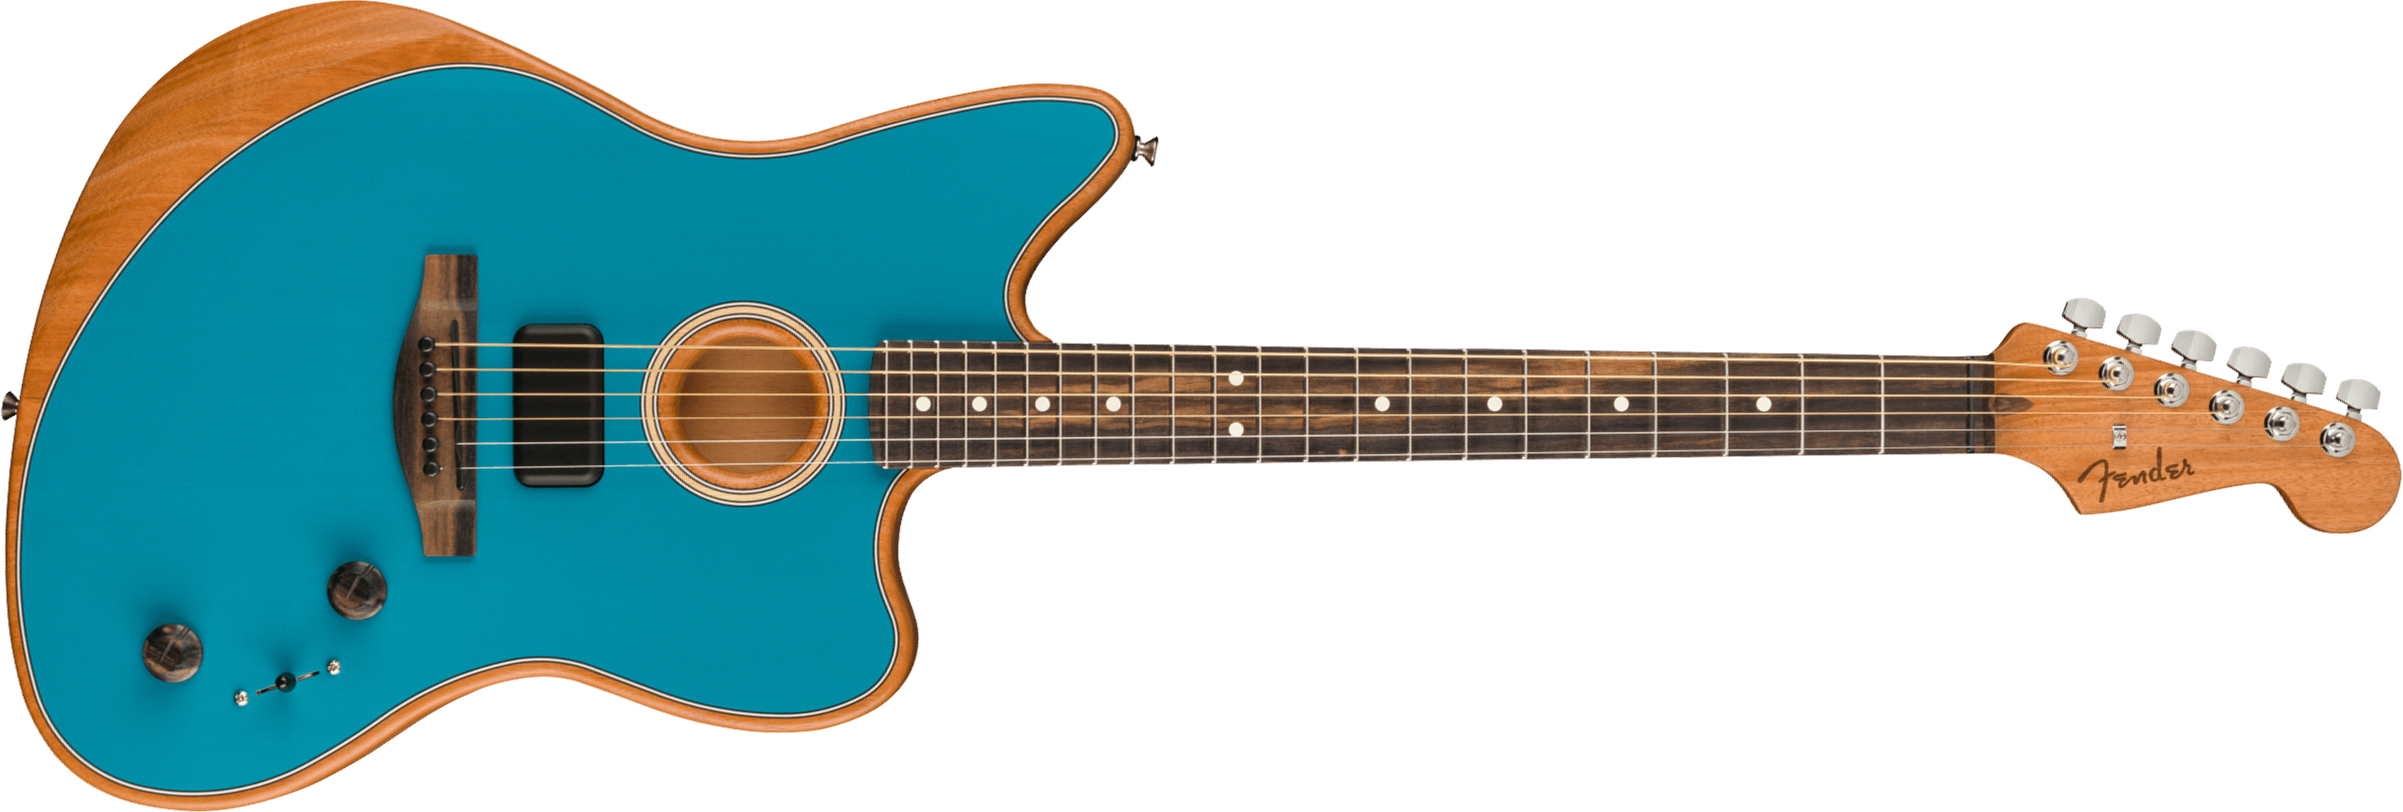 Fender American Acoustasonic Jazzmaster Usa Eb - Ocean Turquoise - Guitare Electro Acoustique - Main picture